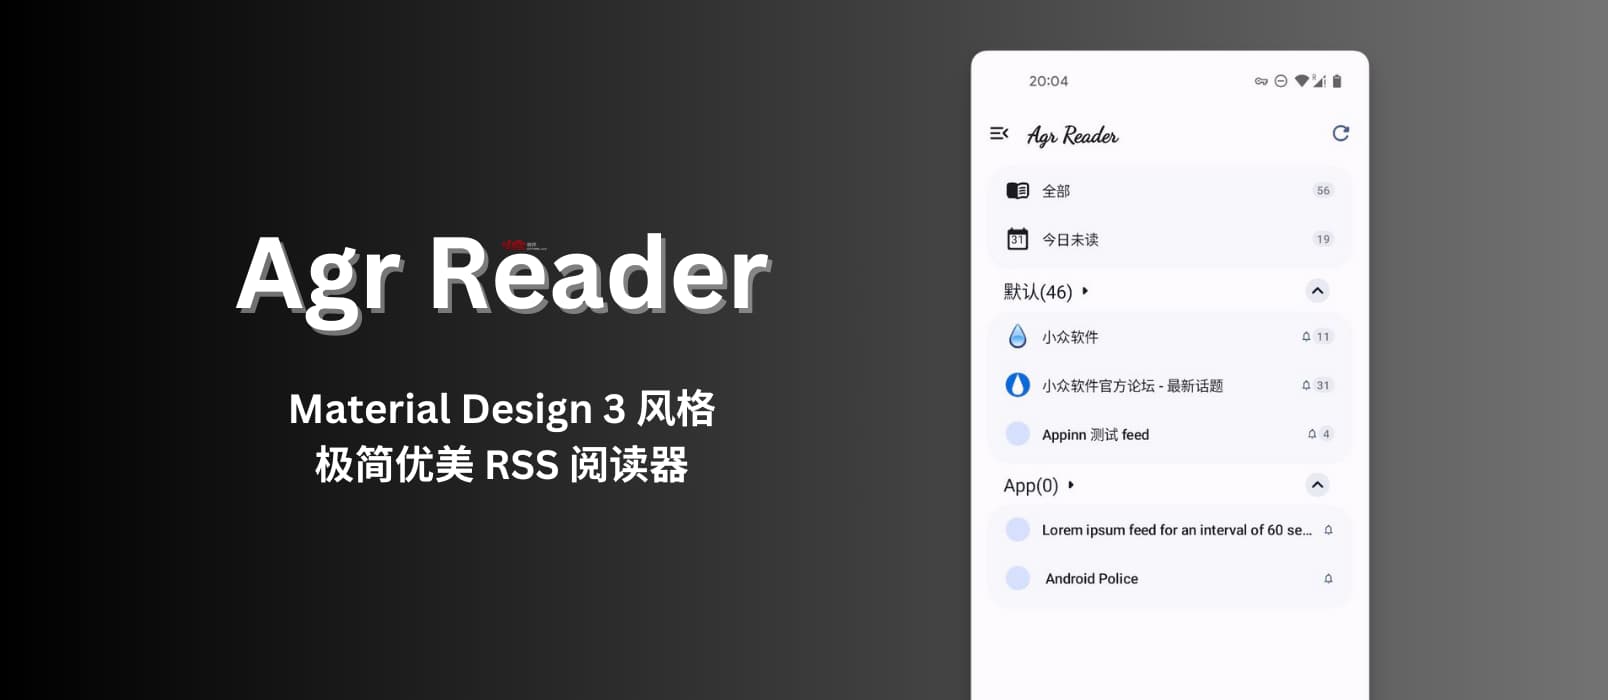 Agr Reader – 一个简单的安卓 RSS 阅读器，Material Design 3 风格